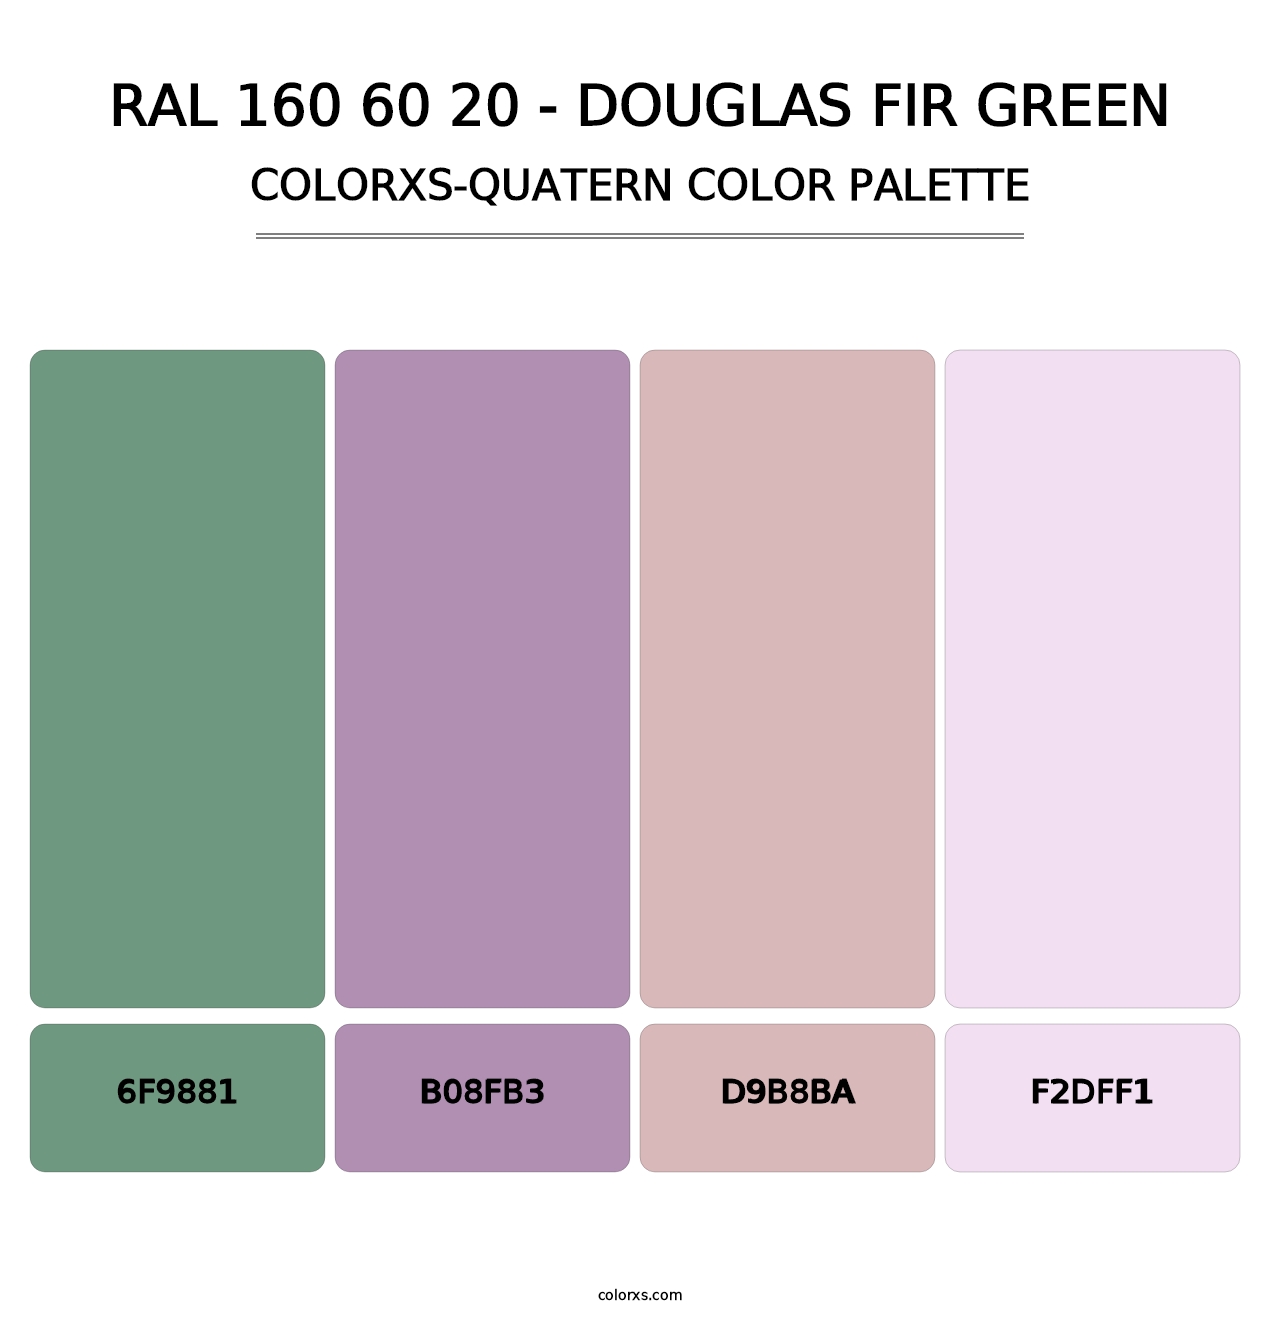 RAL 160 60 20 - Douglas Fir Green - Colorxs Quatern Palette